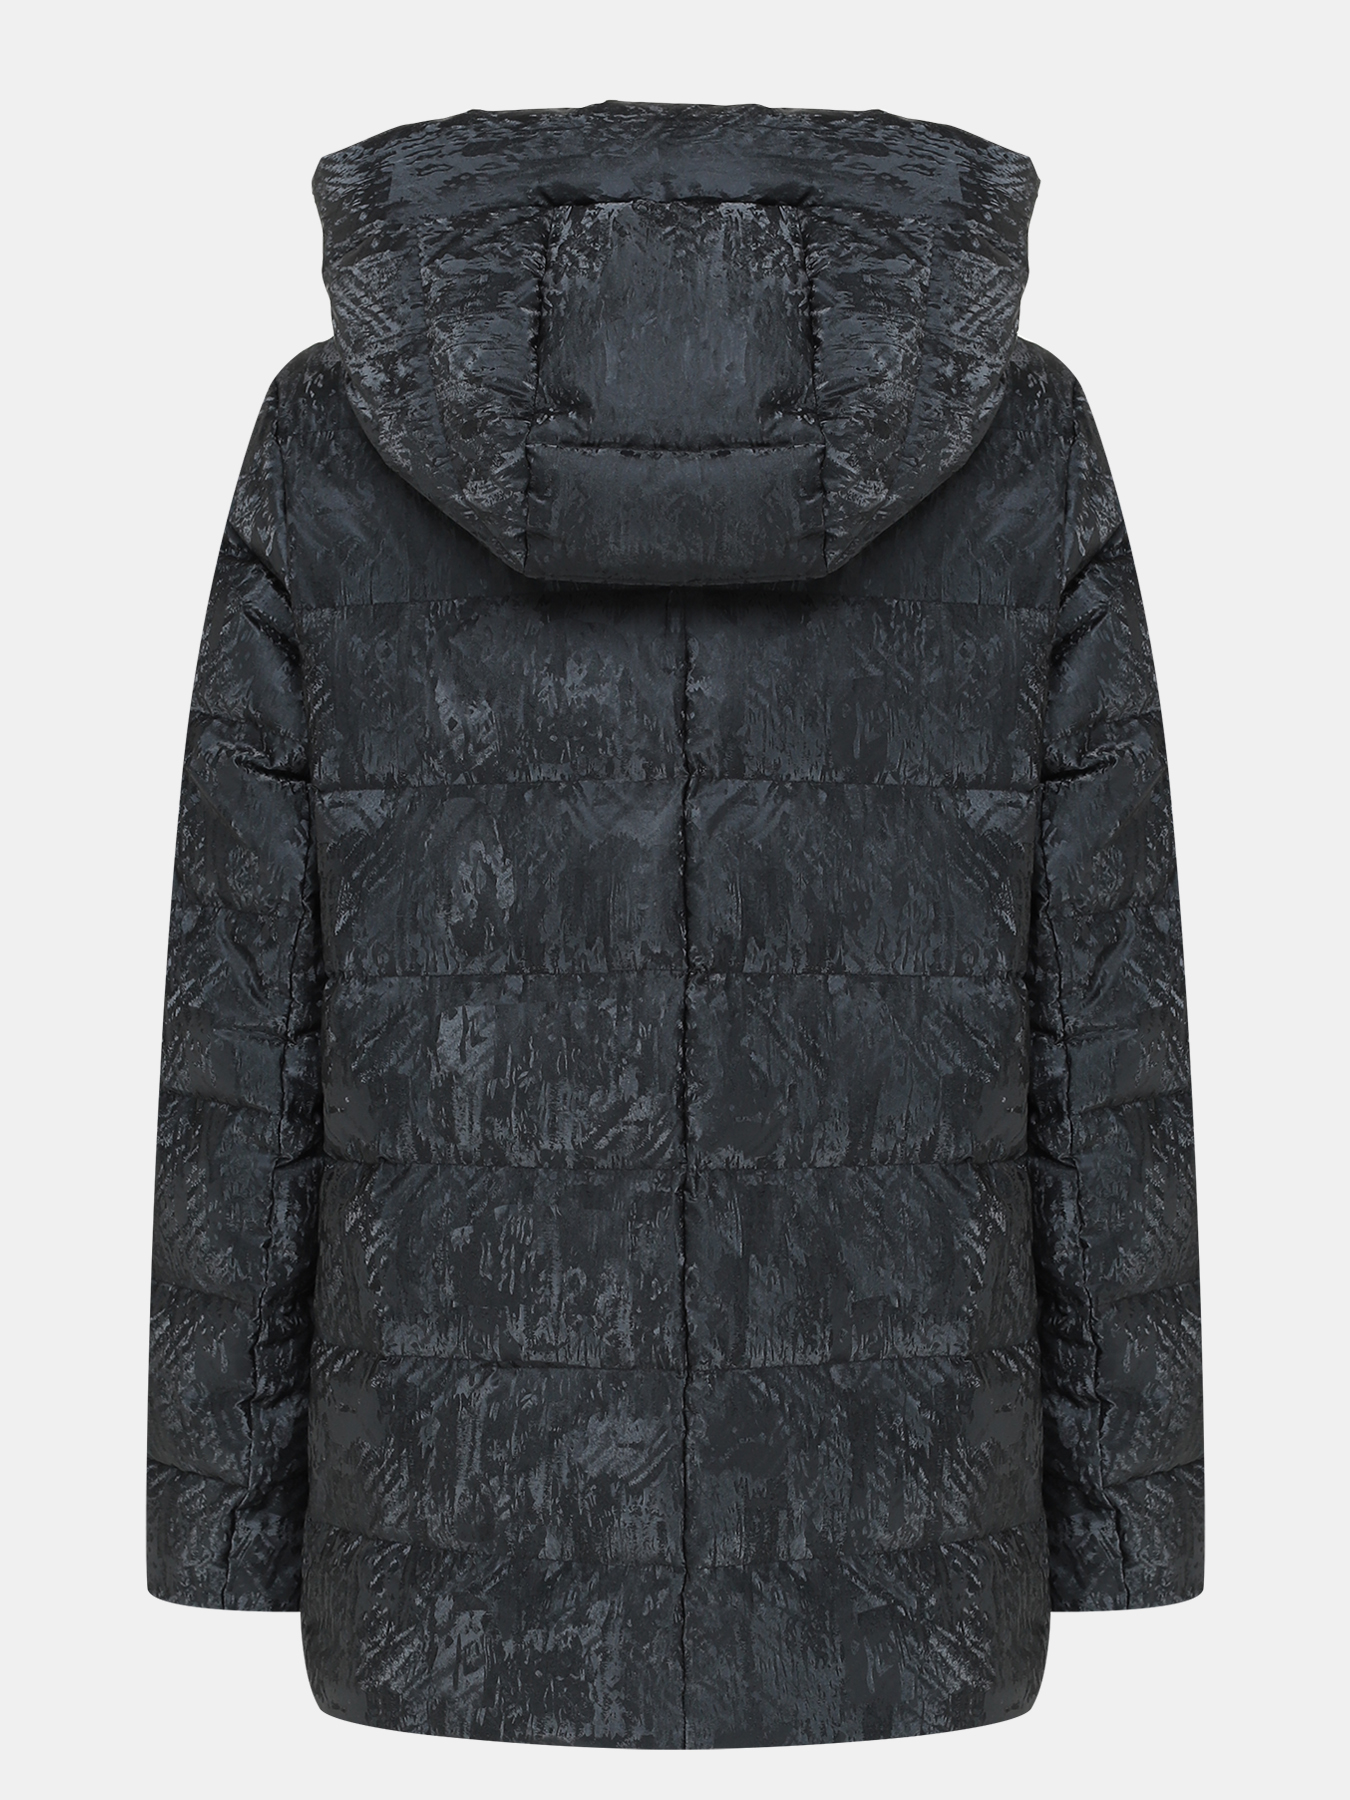 Куртка ORSA Couture 383919-023, цвет мультиколор, размер 46 - фото 2